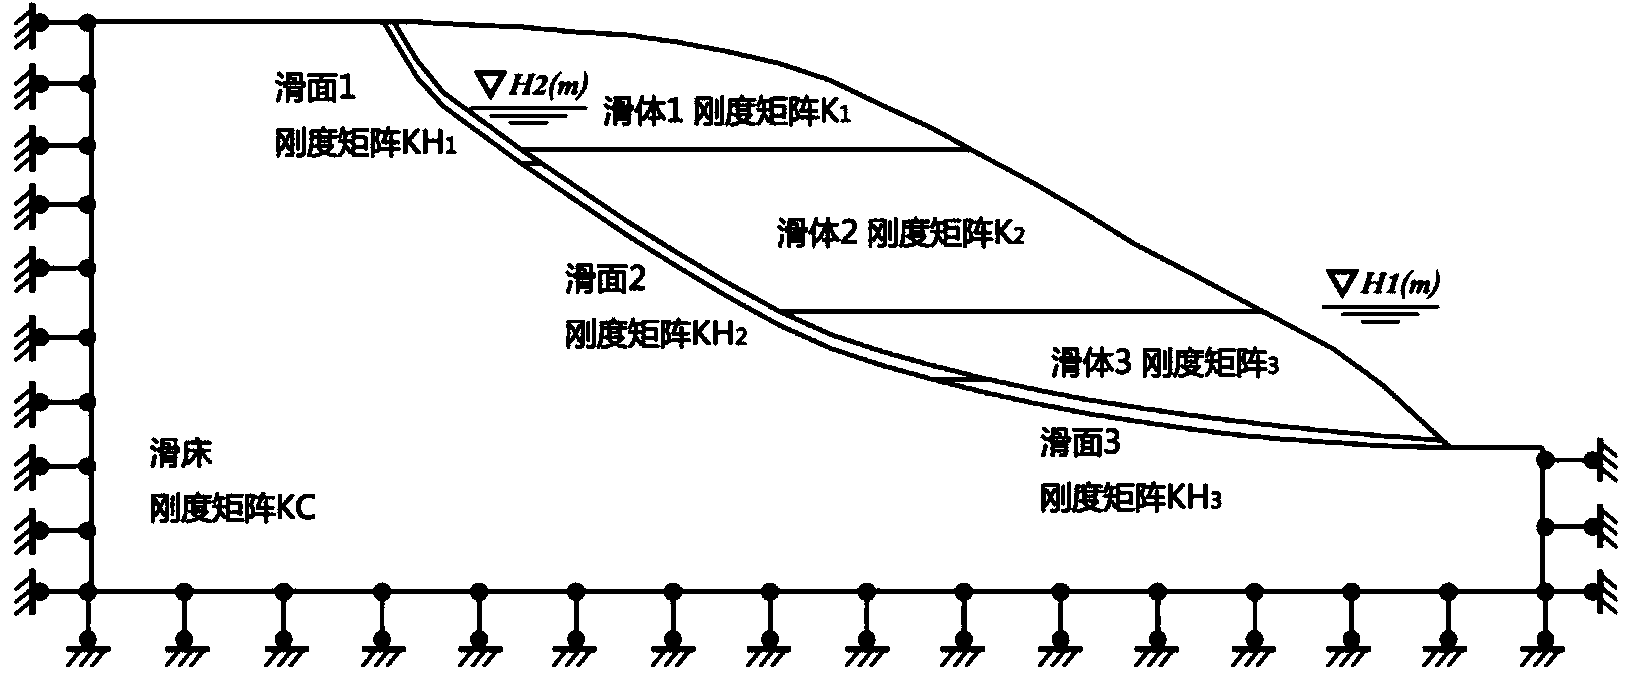 Slide face boundary method for calculating slope stability